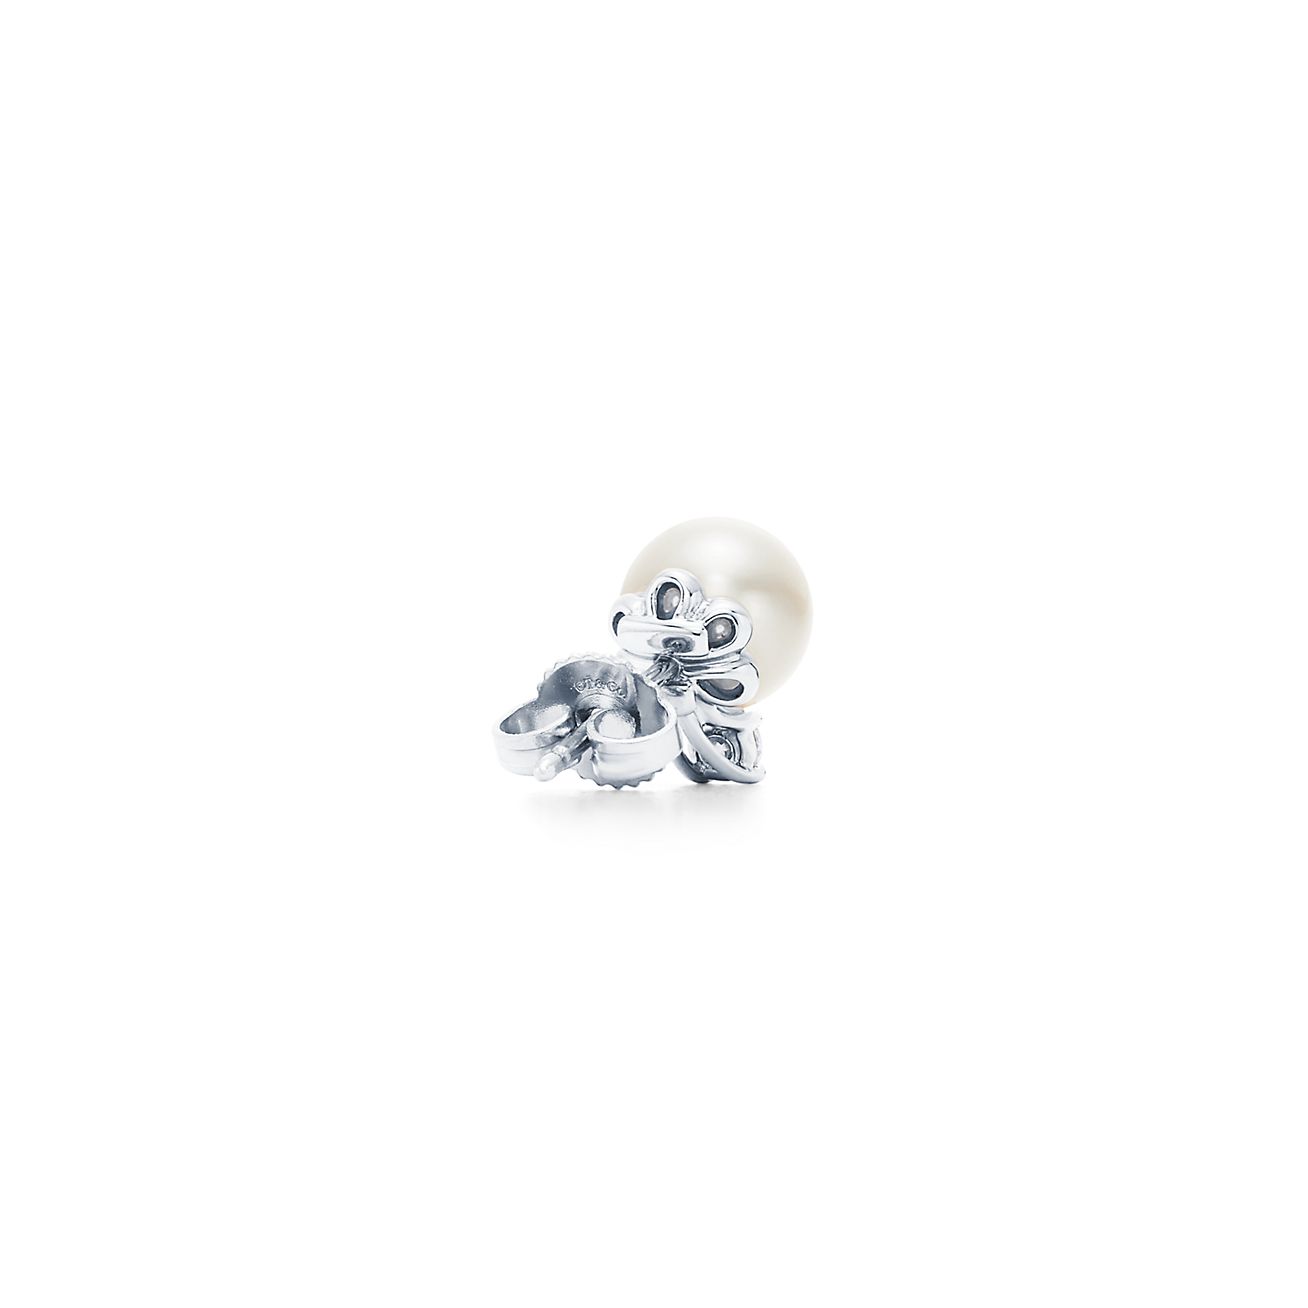 tiffany diamond and pearl earrings